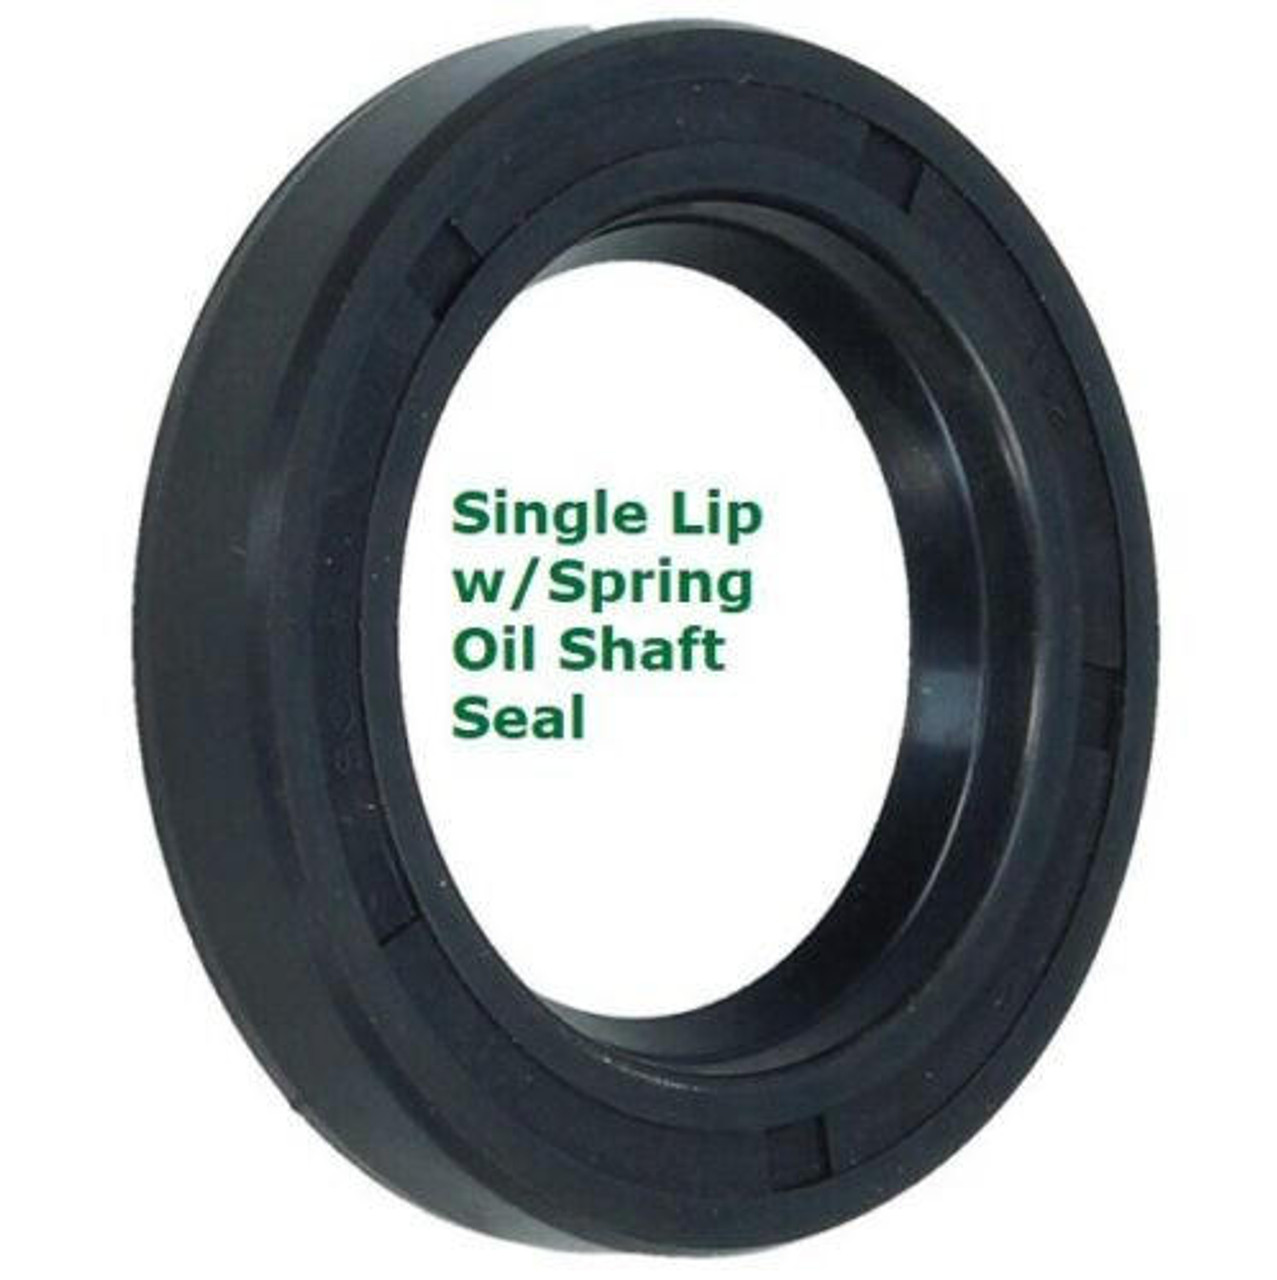 Metric Oil Shaft Seal 65 x 80 x 10mm  Single Lip  Price for 1 pc